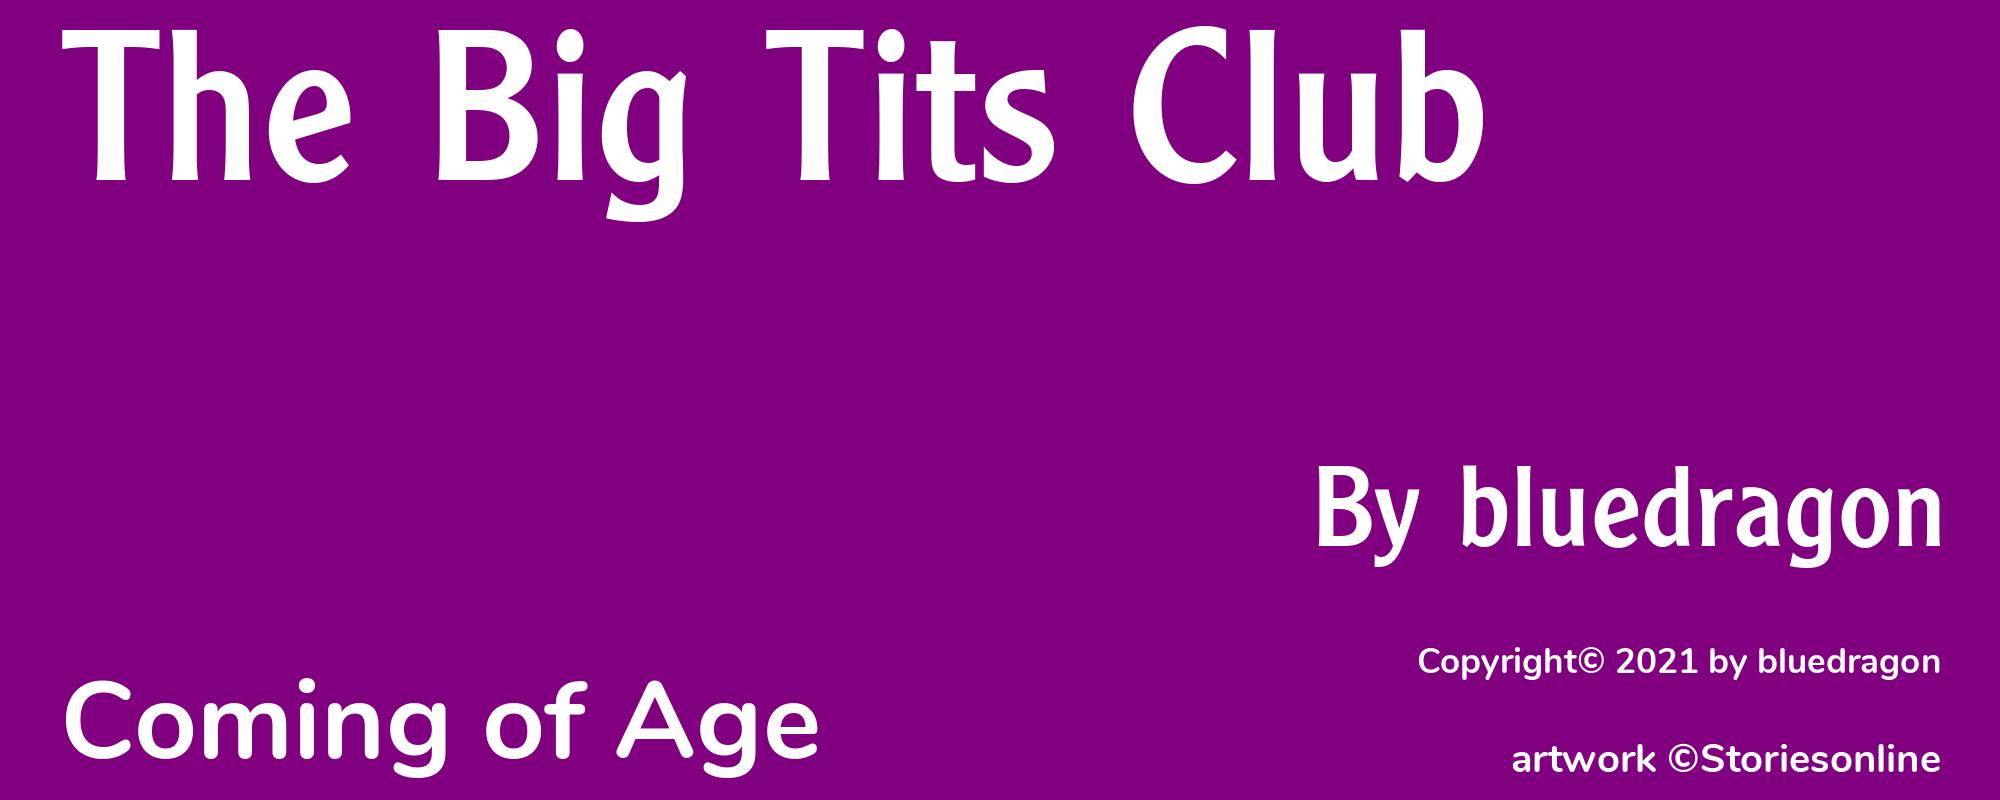 The Big Tits Club - Cover